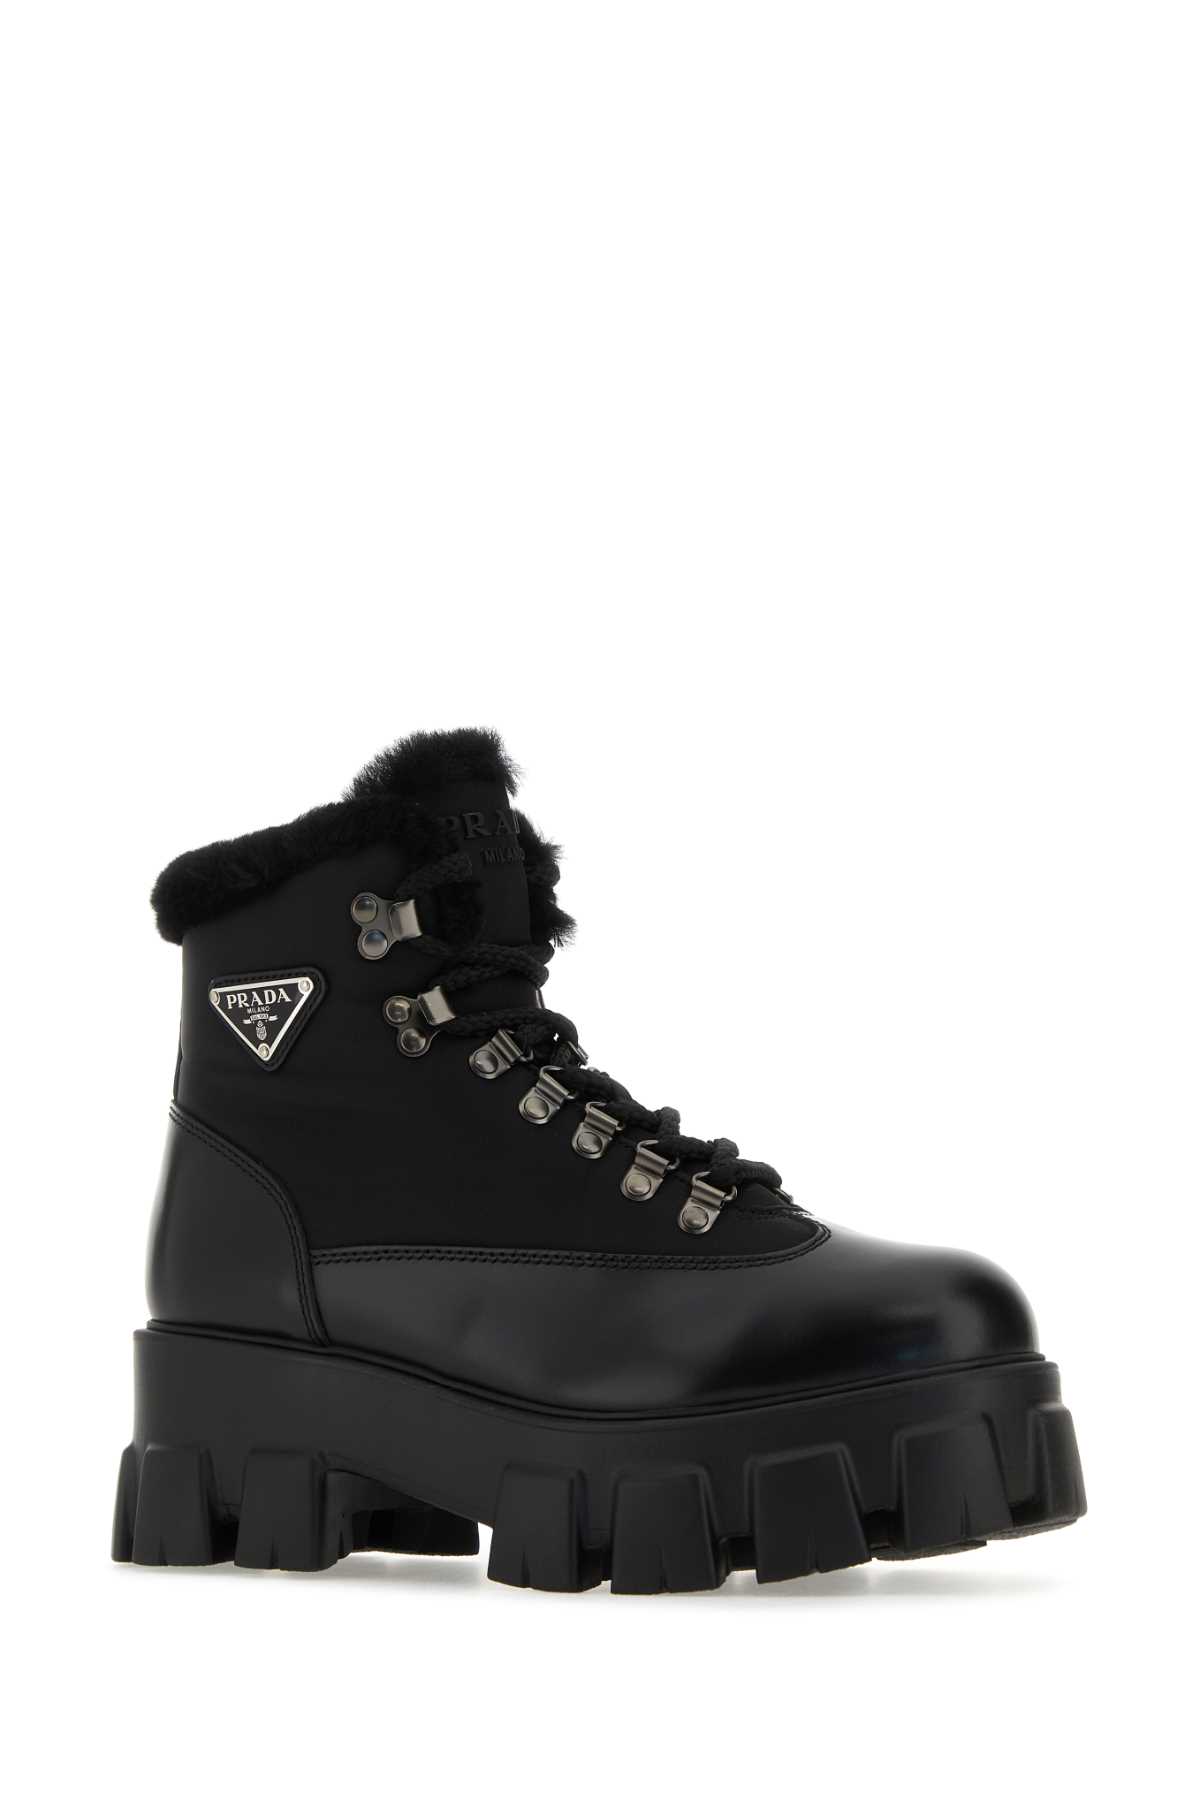 Prada Black Leather And Nylon Monolith Ankle Boots In Nero